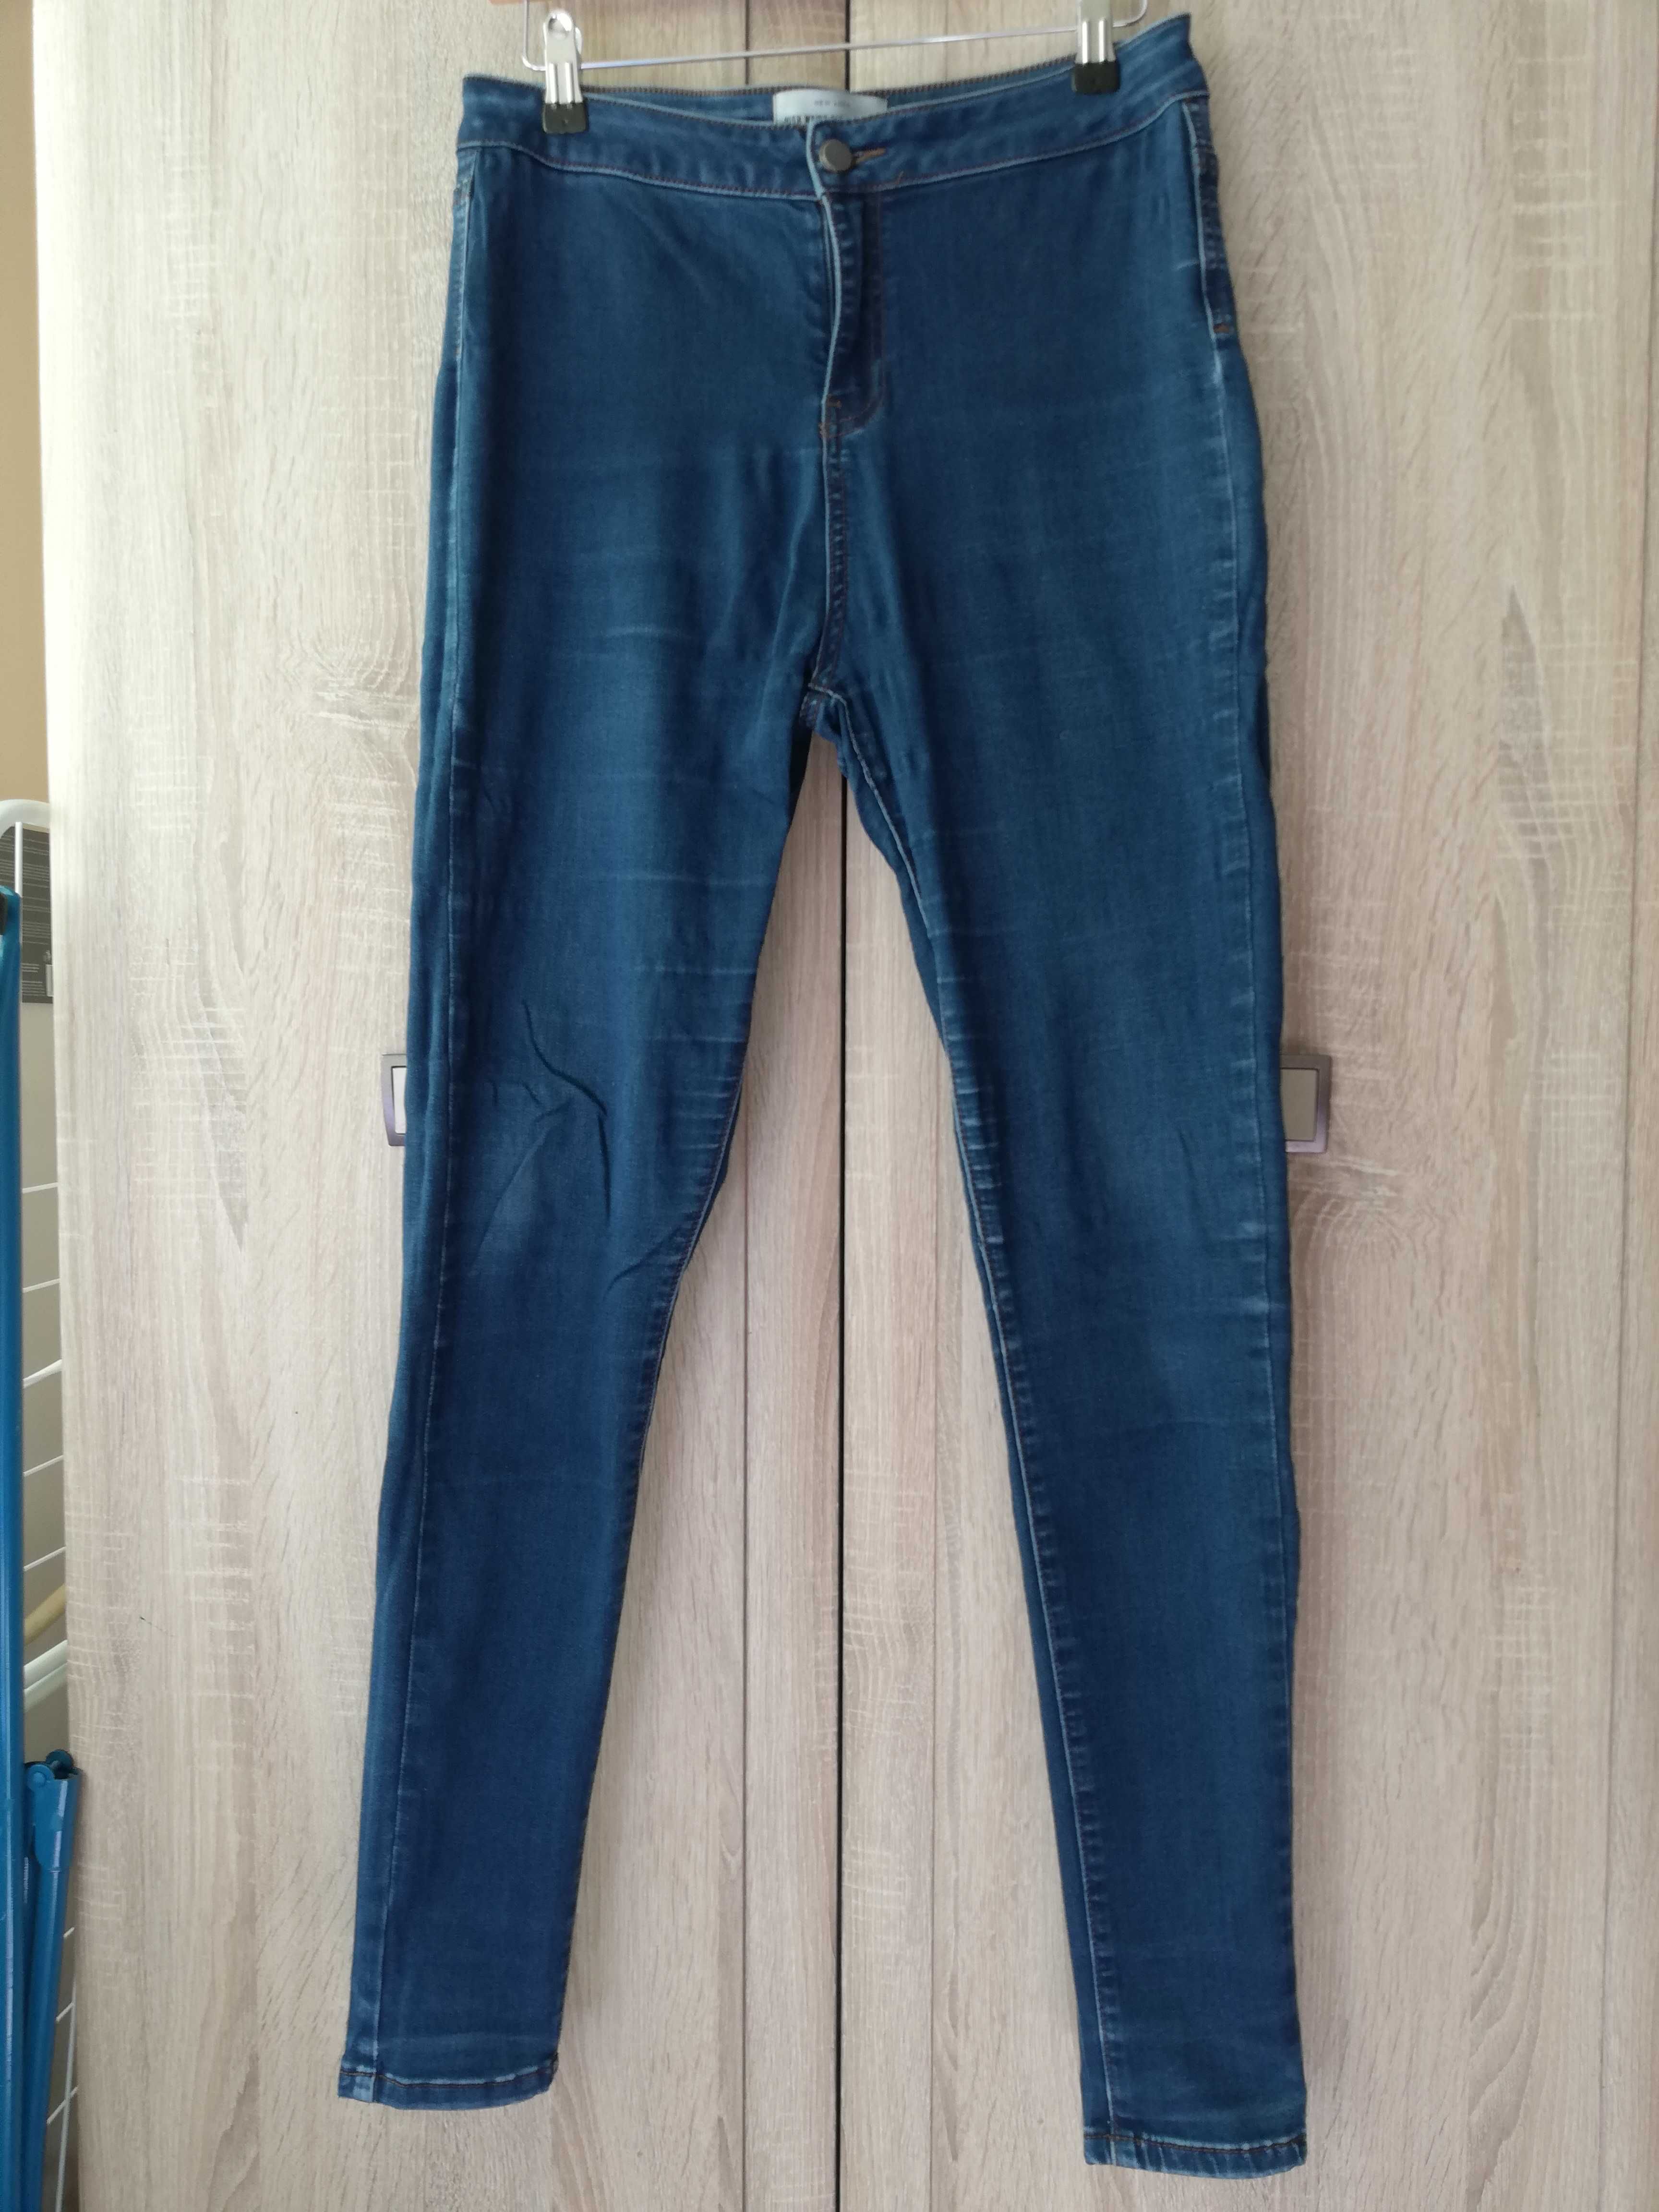 Spodnie damskie jeansy 38/40 New Look